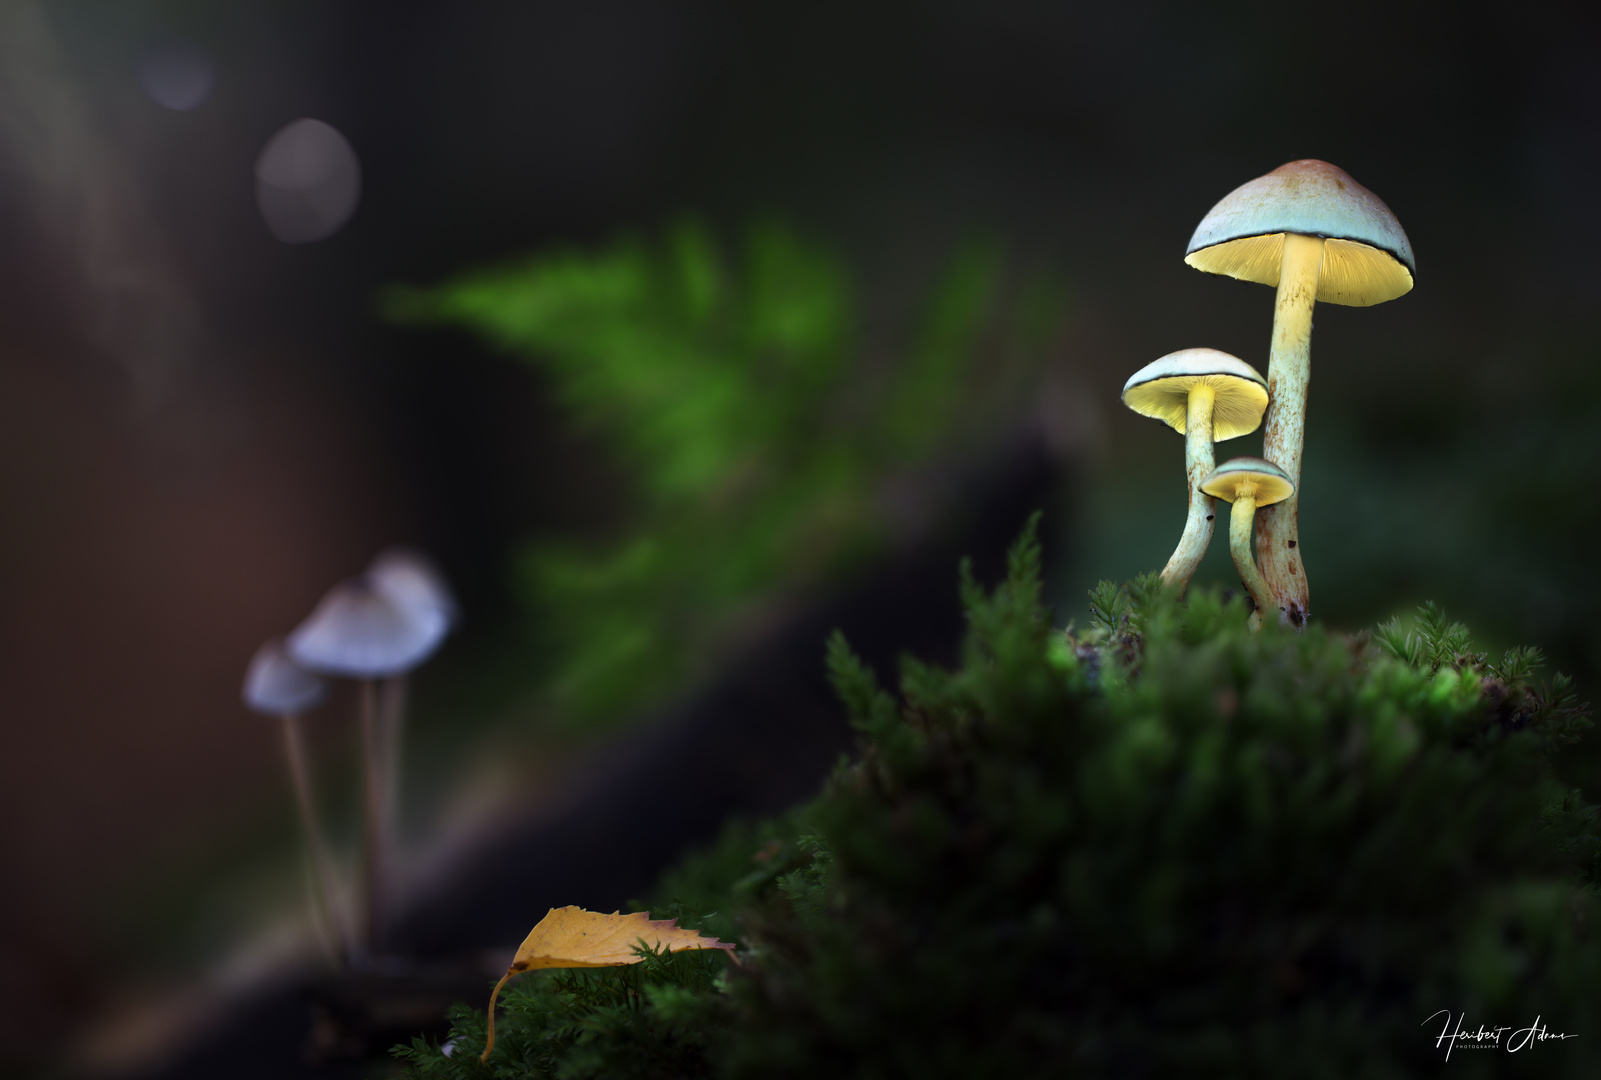 Little luminous Mushroom Family